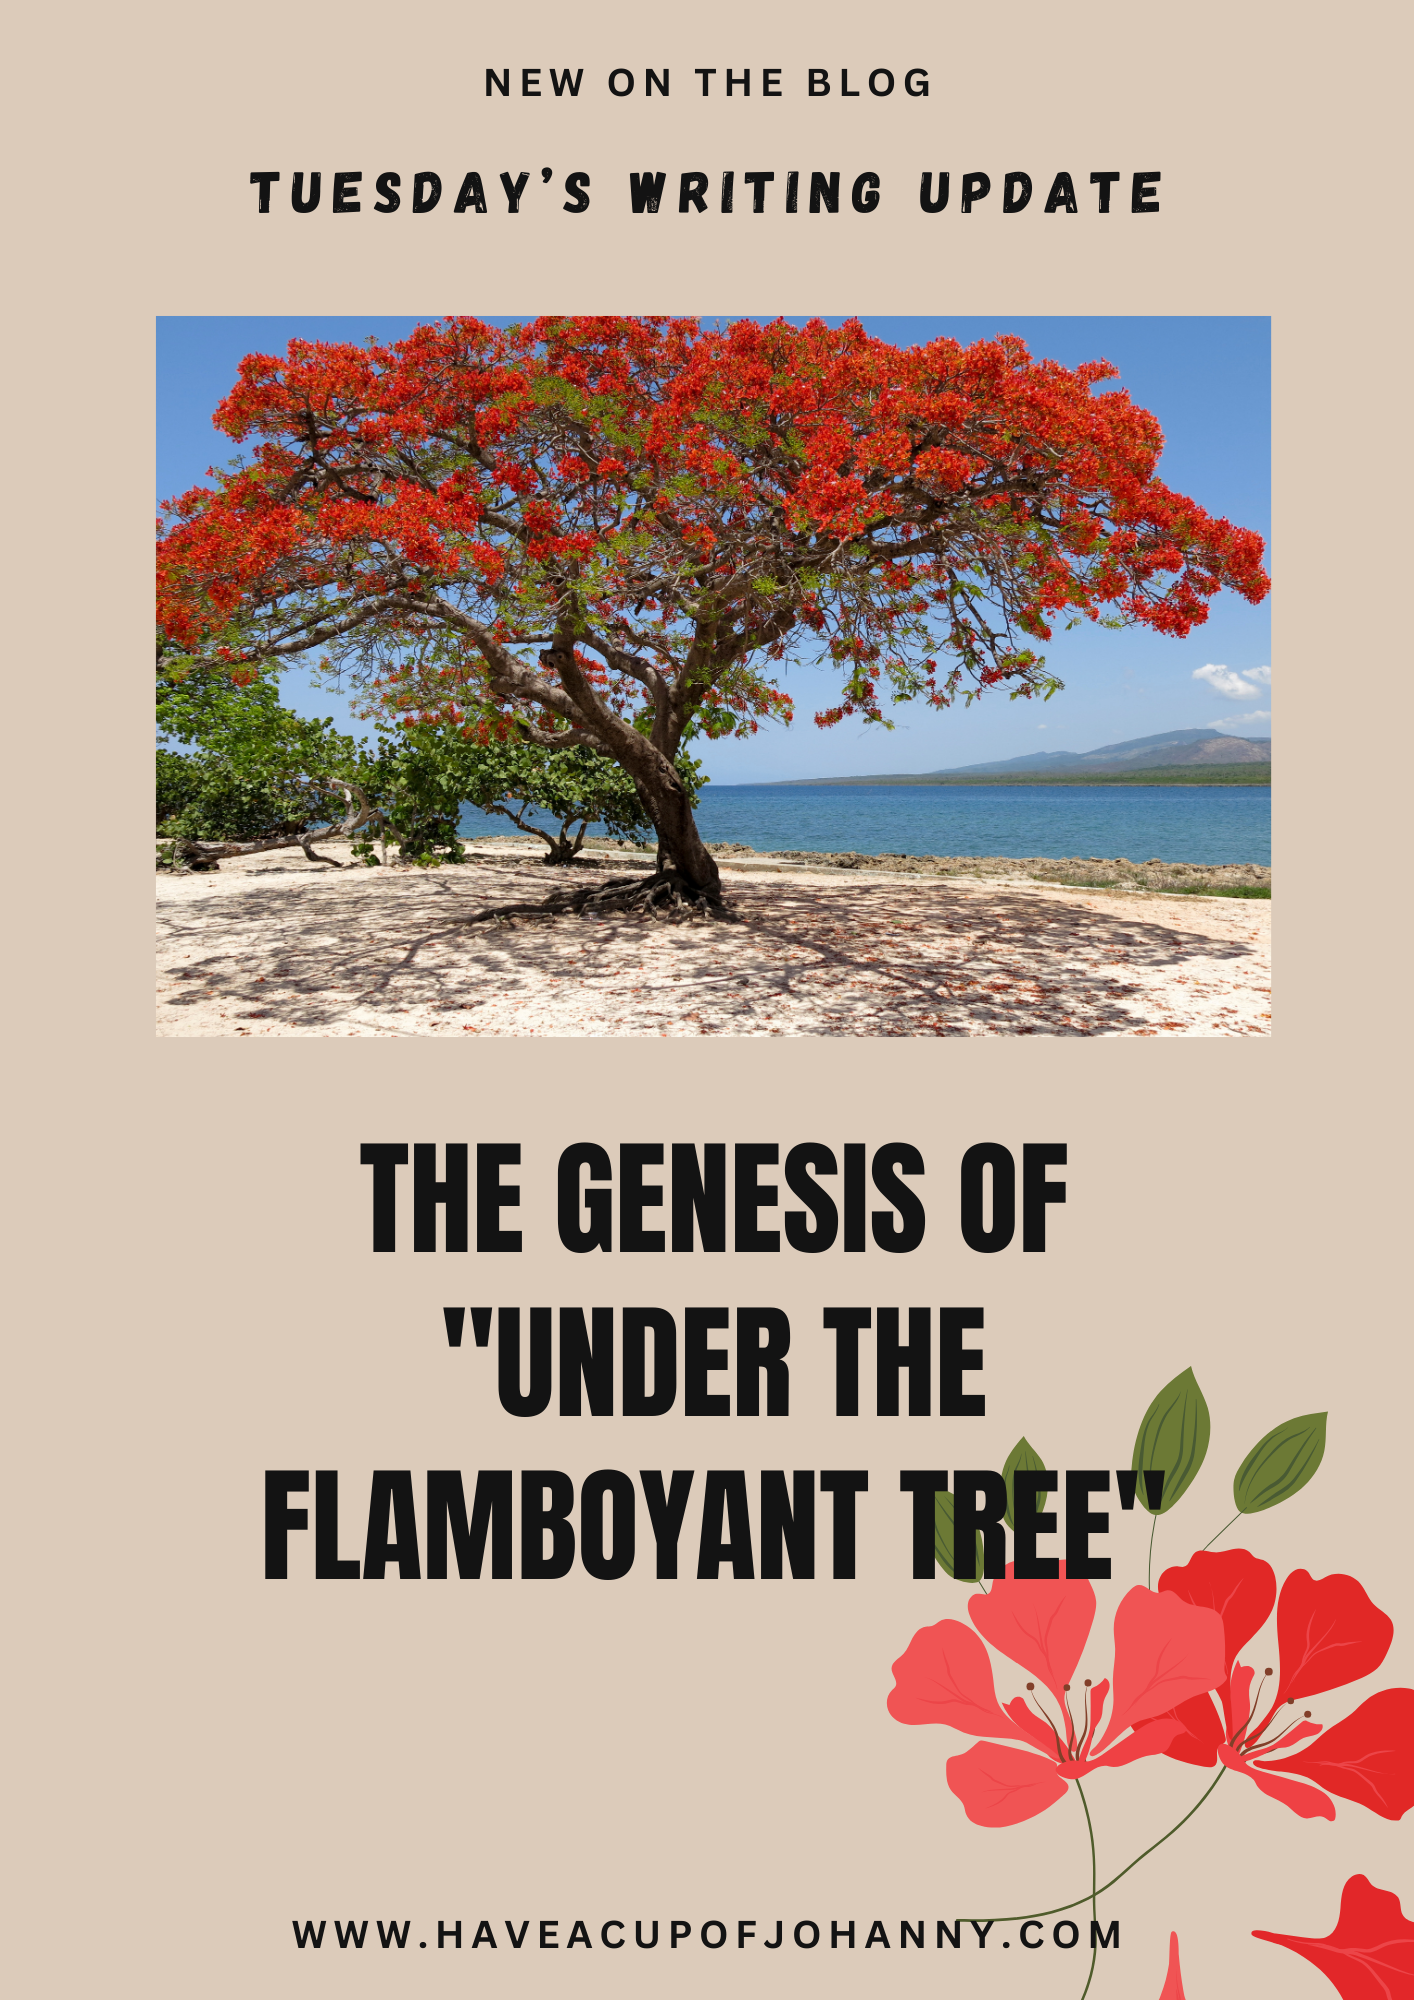 The Genesis of “Under The Flamboyant Tree”